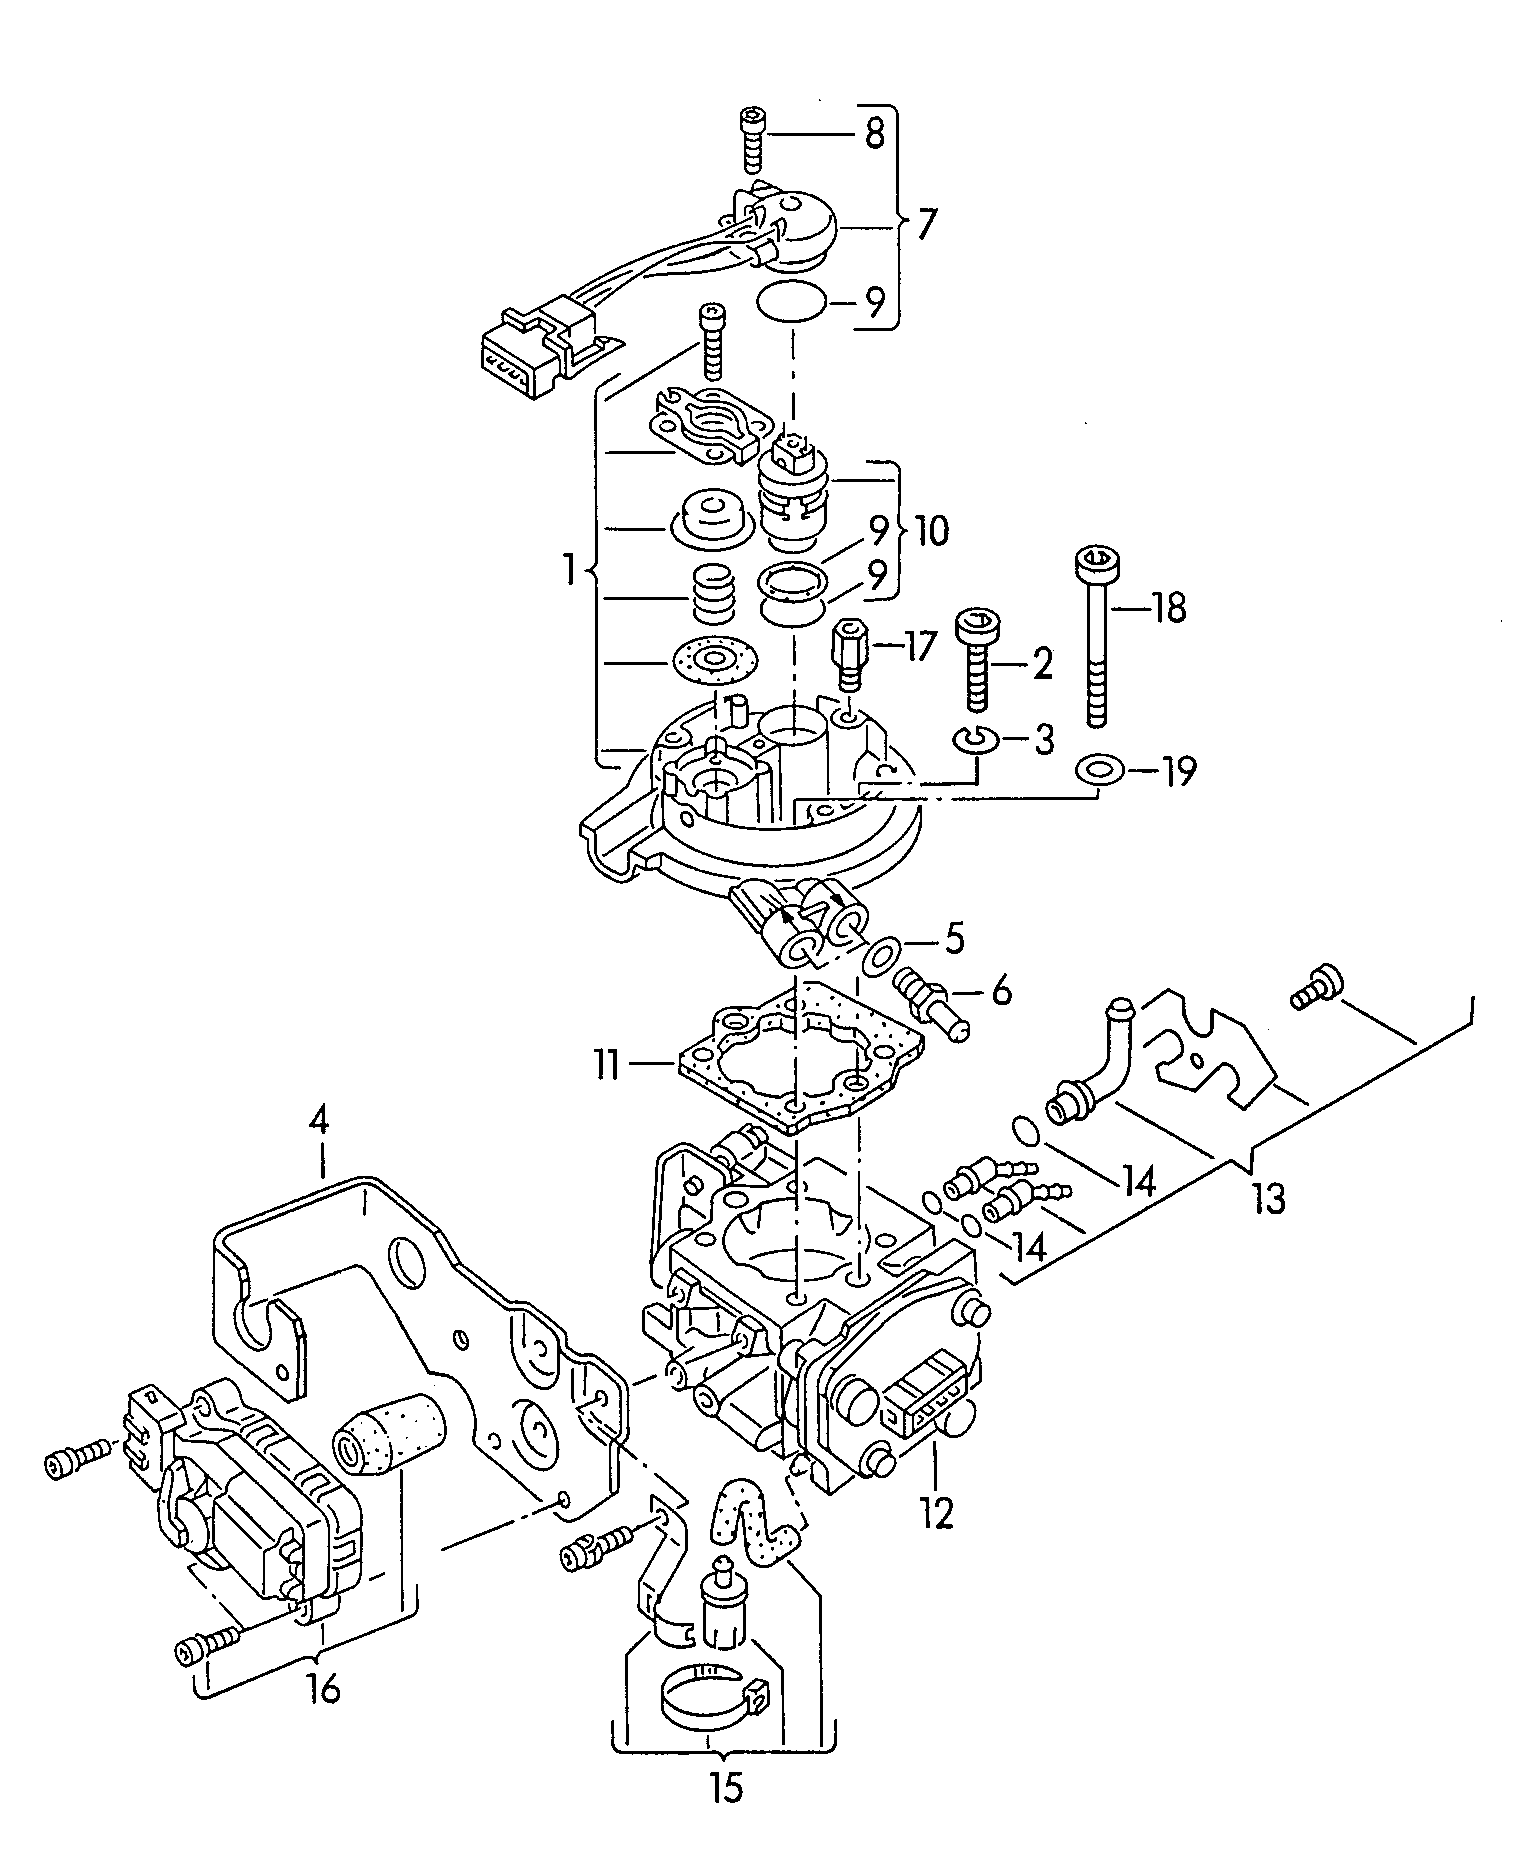 injector unit - Golf Cabriolet(GOC)  